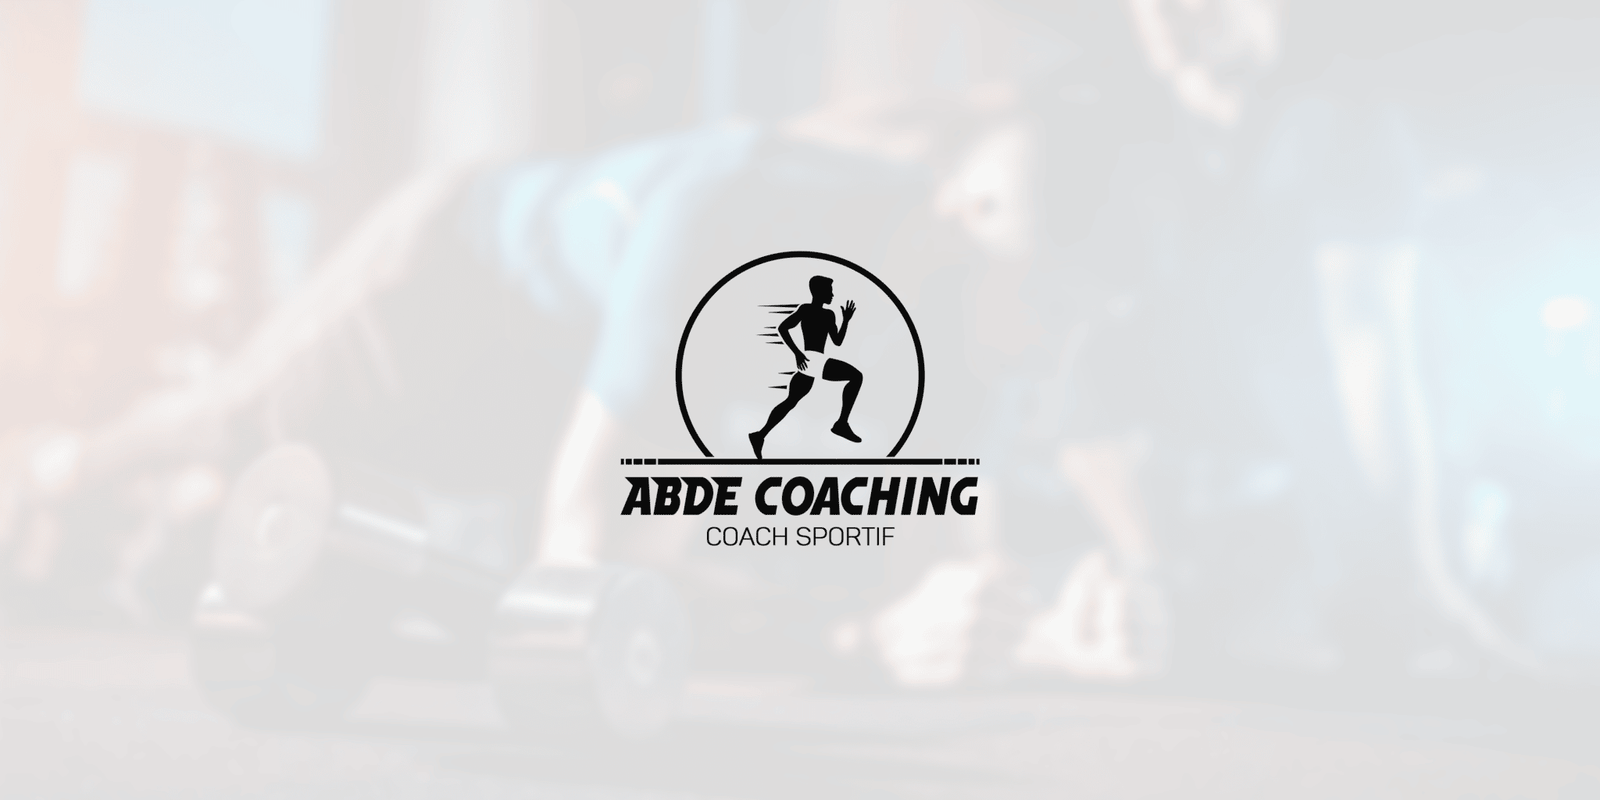 Abdé Coaching